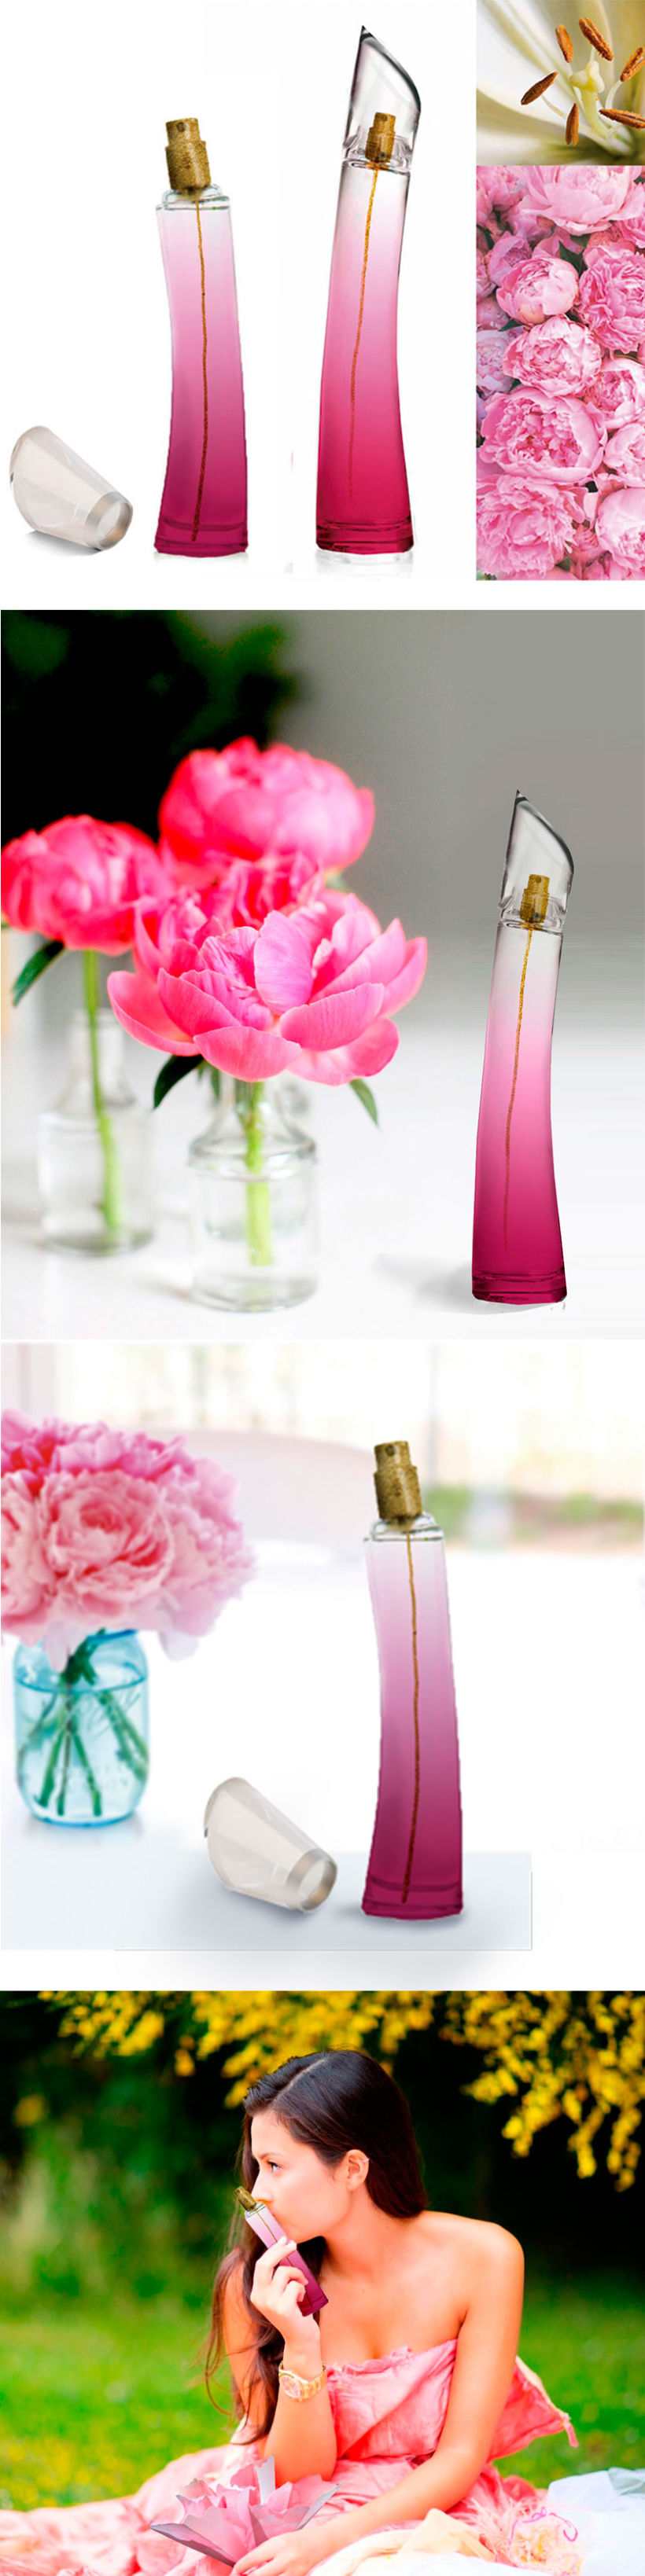 Bloom, perfume 6